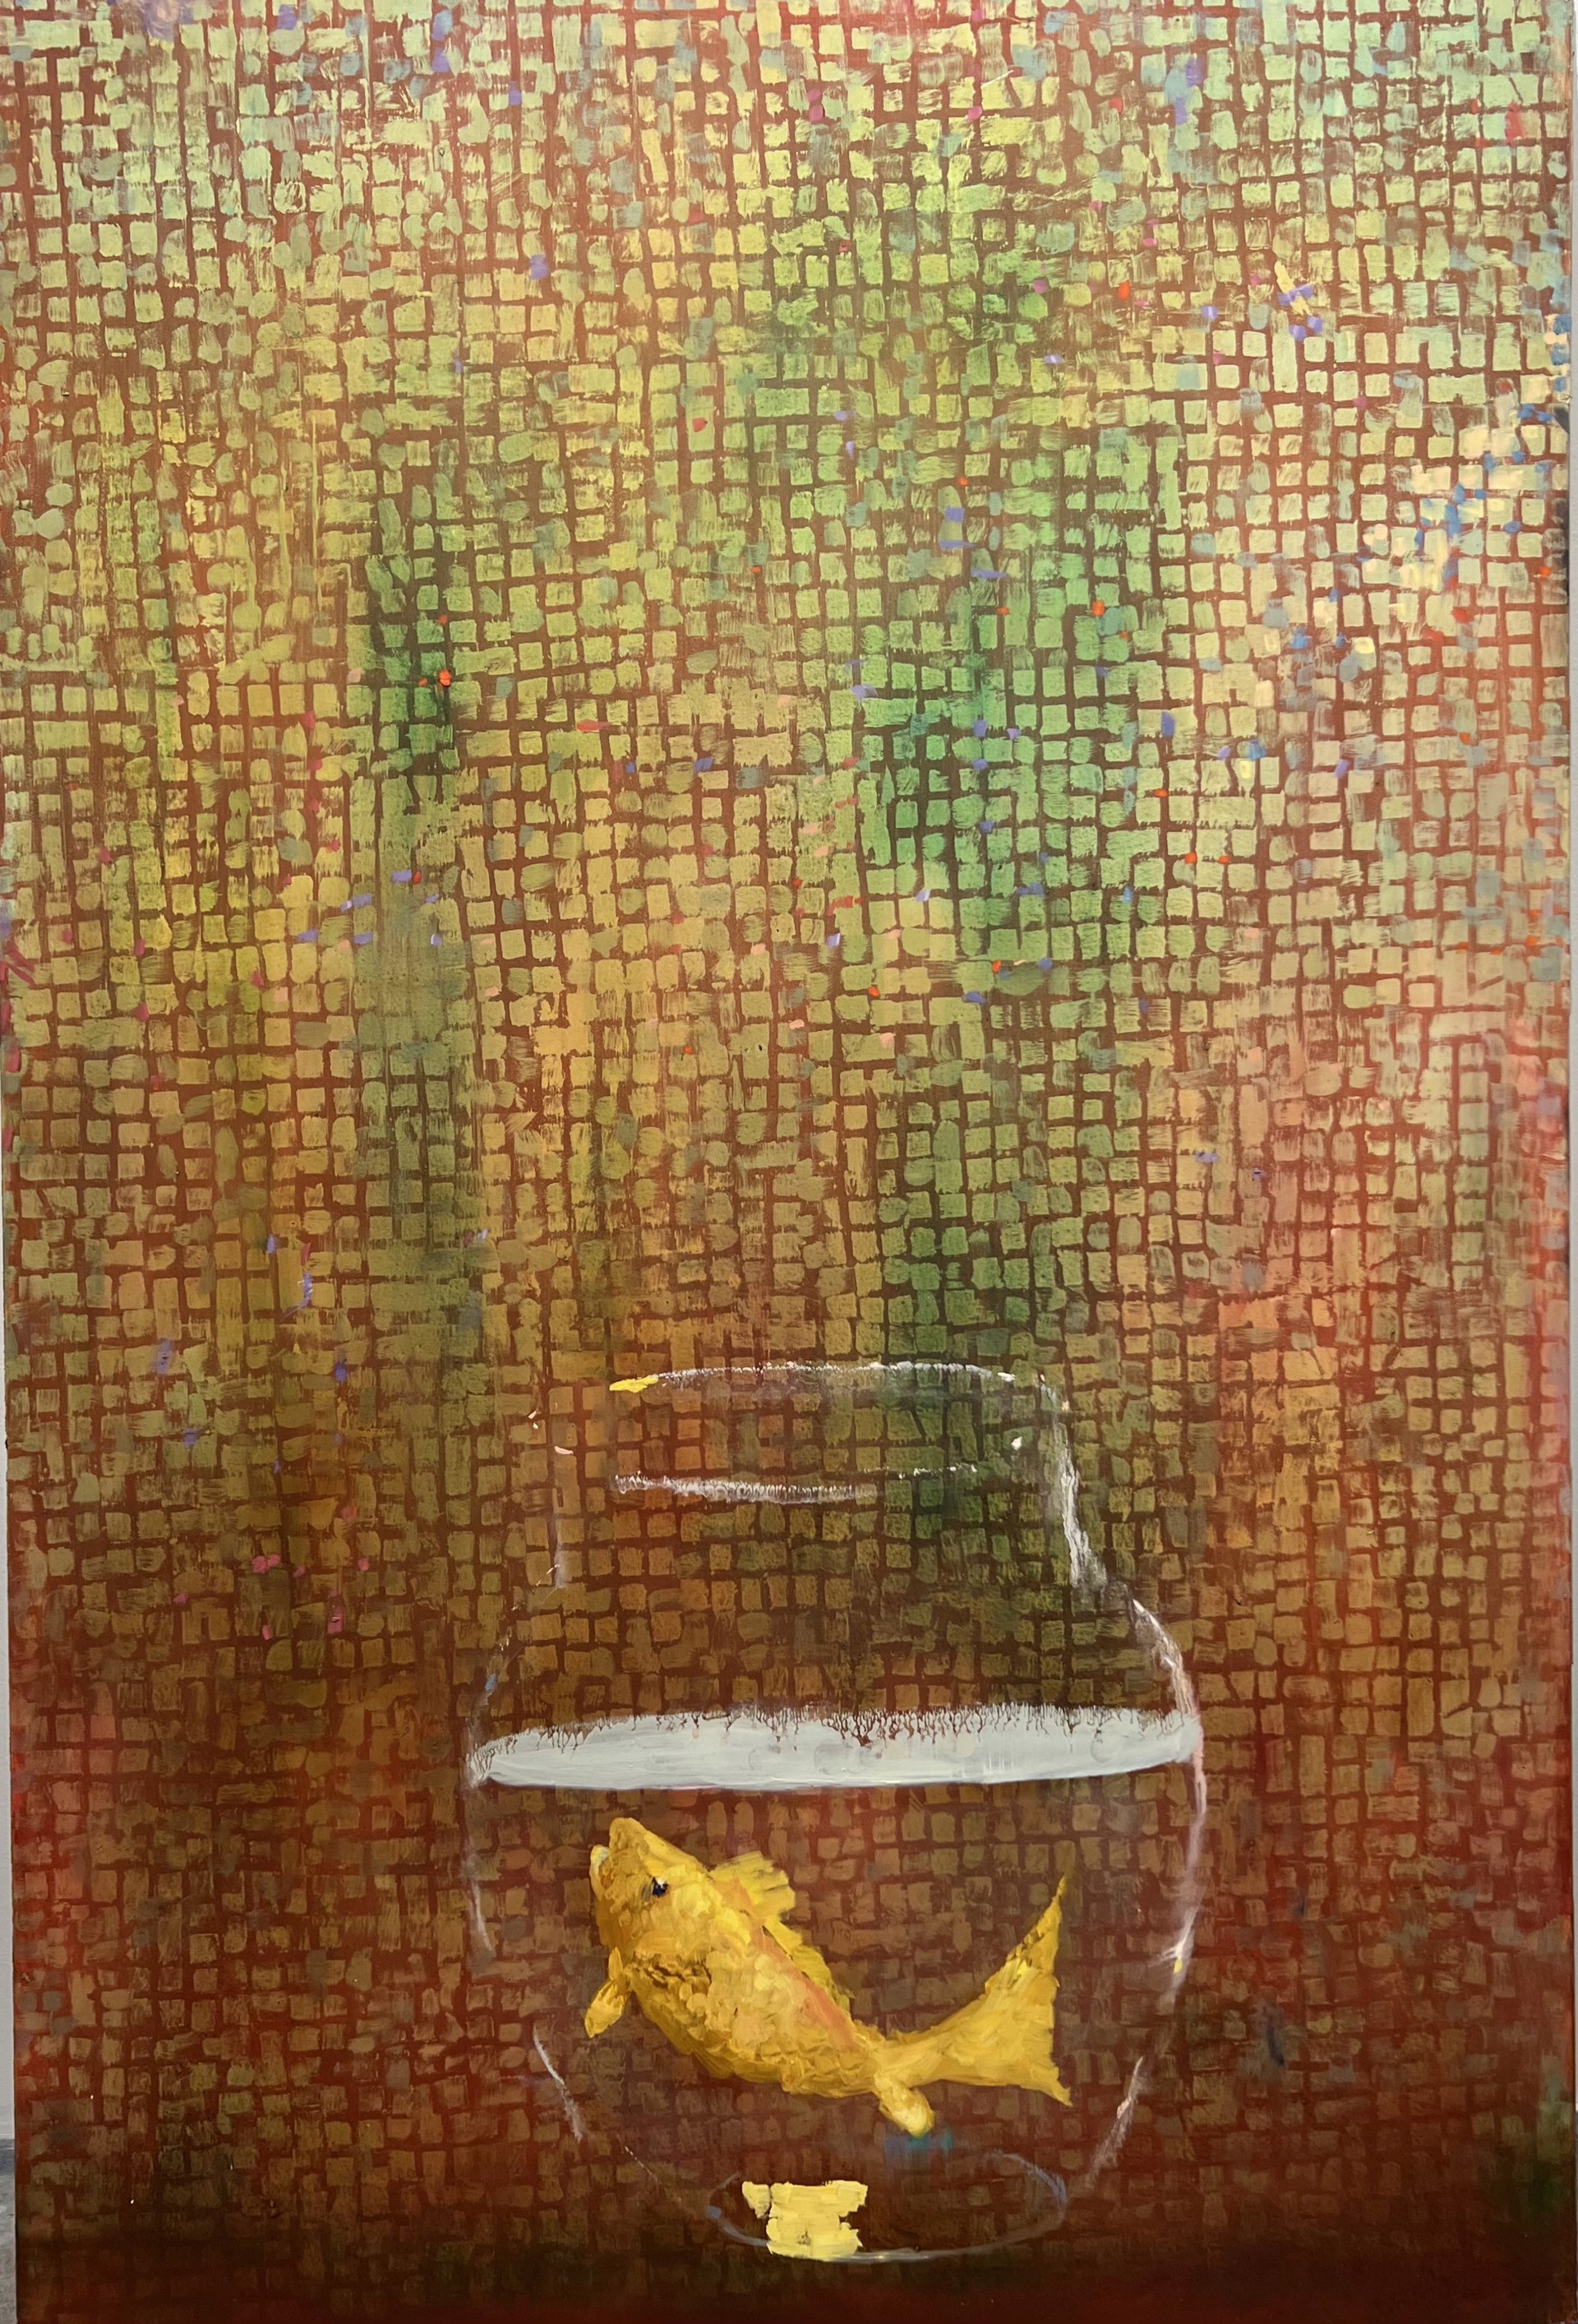 Golden Fish in a Bowl by Greg Decker